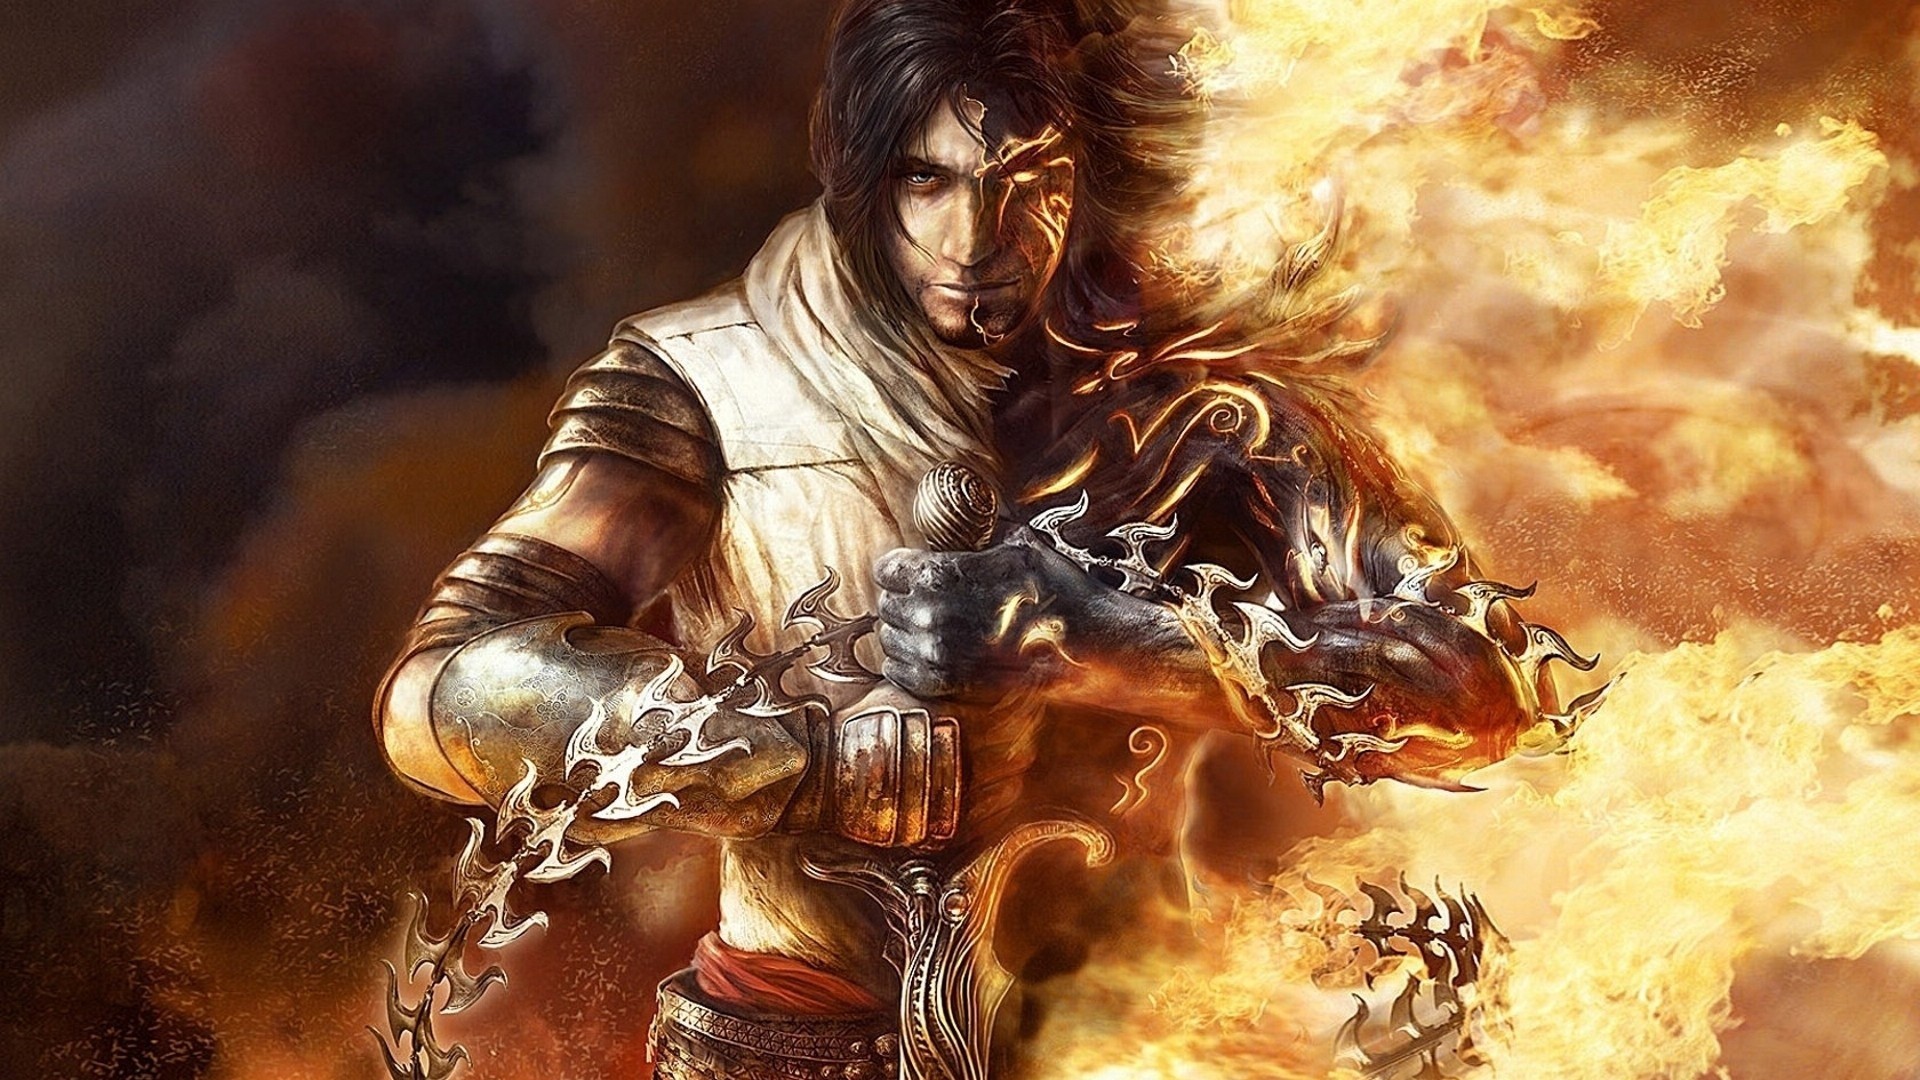 General 1920x1080 fantasy art hero men sword fire armor video games Prince of Persia: The Two Thrones video game men video game art fantasy men Ubisoft